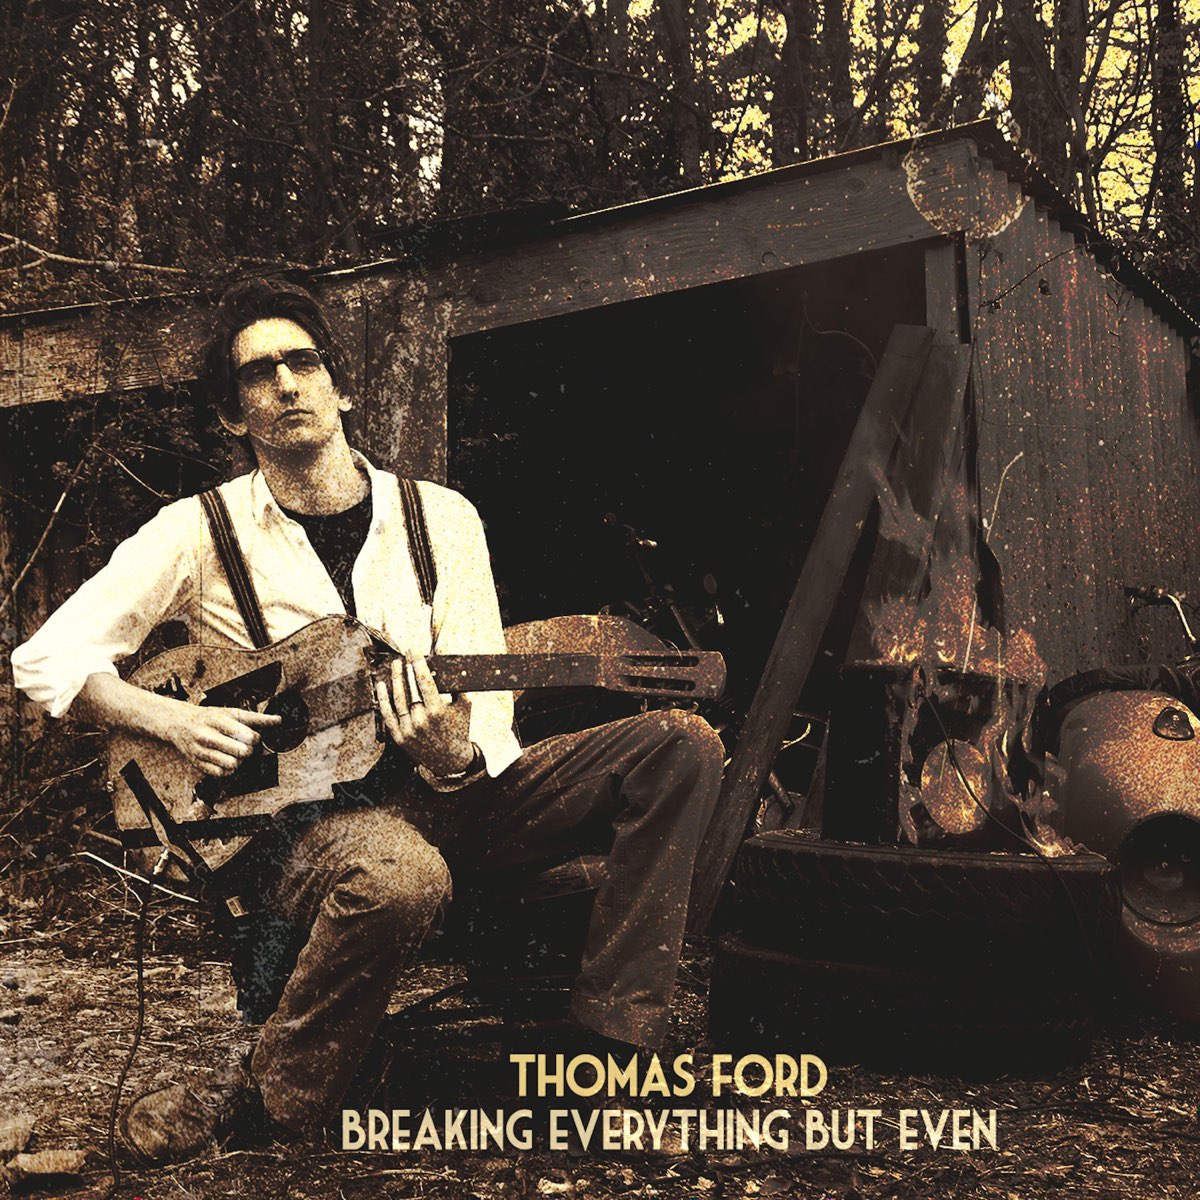 Broken everything. Thomas Ford poet. Thomas Ford Composer.